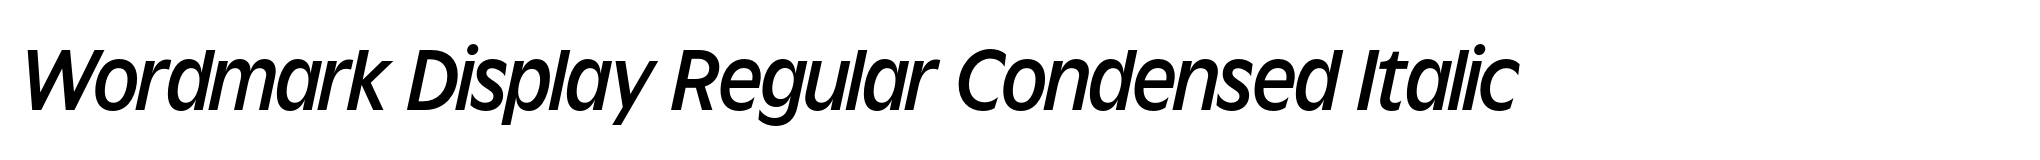 Wordmark Display Regular Condensed Italic image